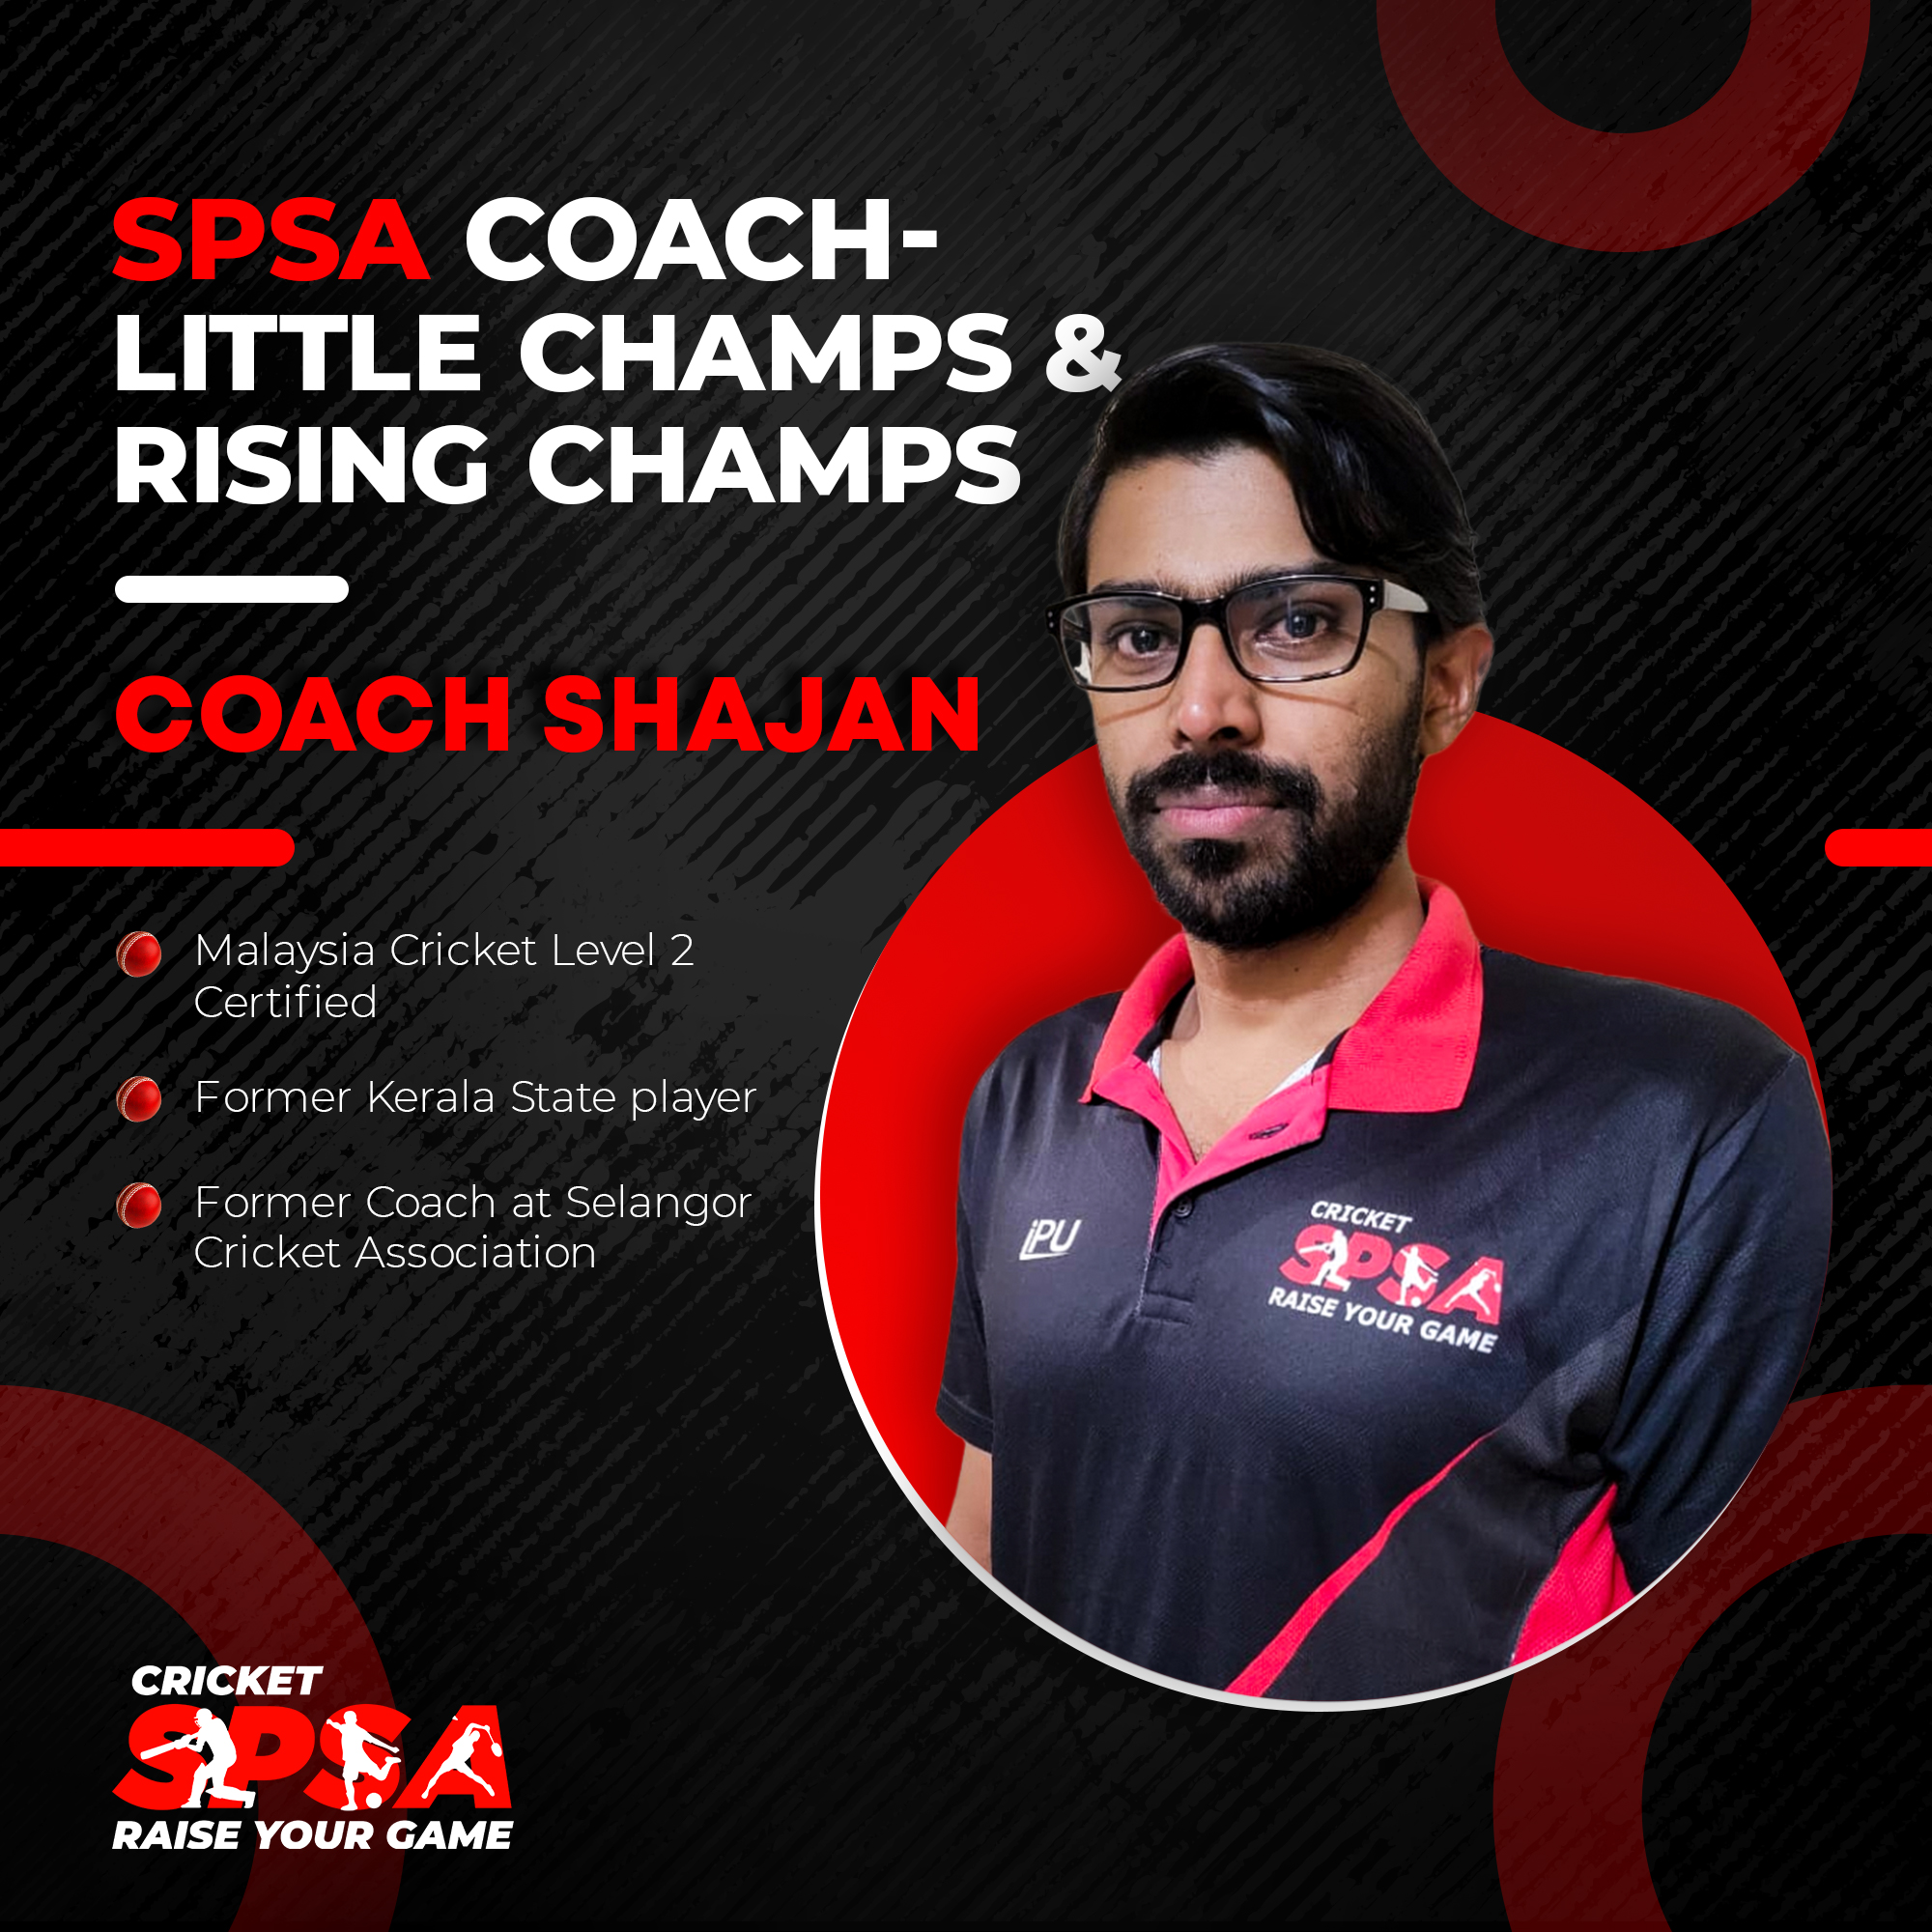 https://spsauae.com/wp-content/uploads/2023/02/SPSA_Coaches_Shajan.jpg